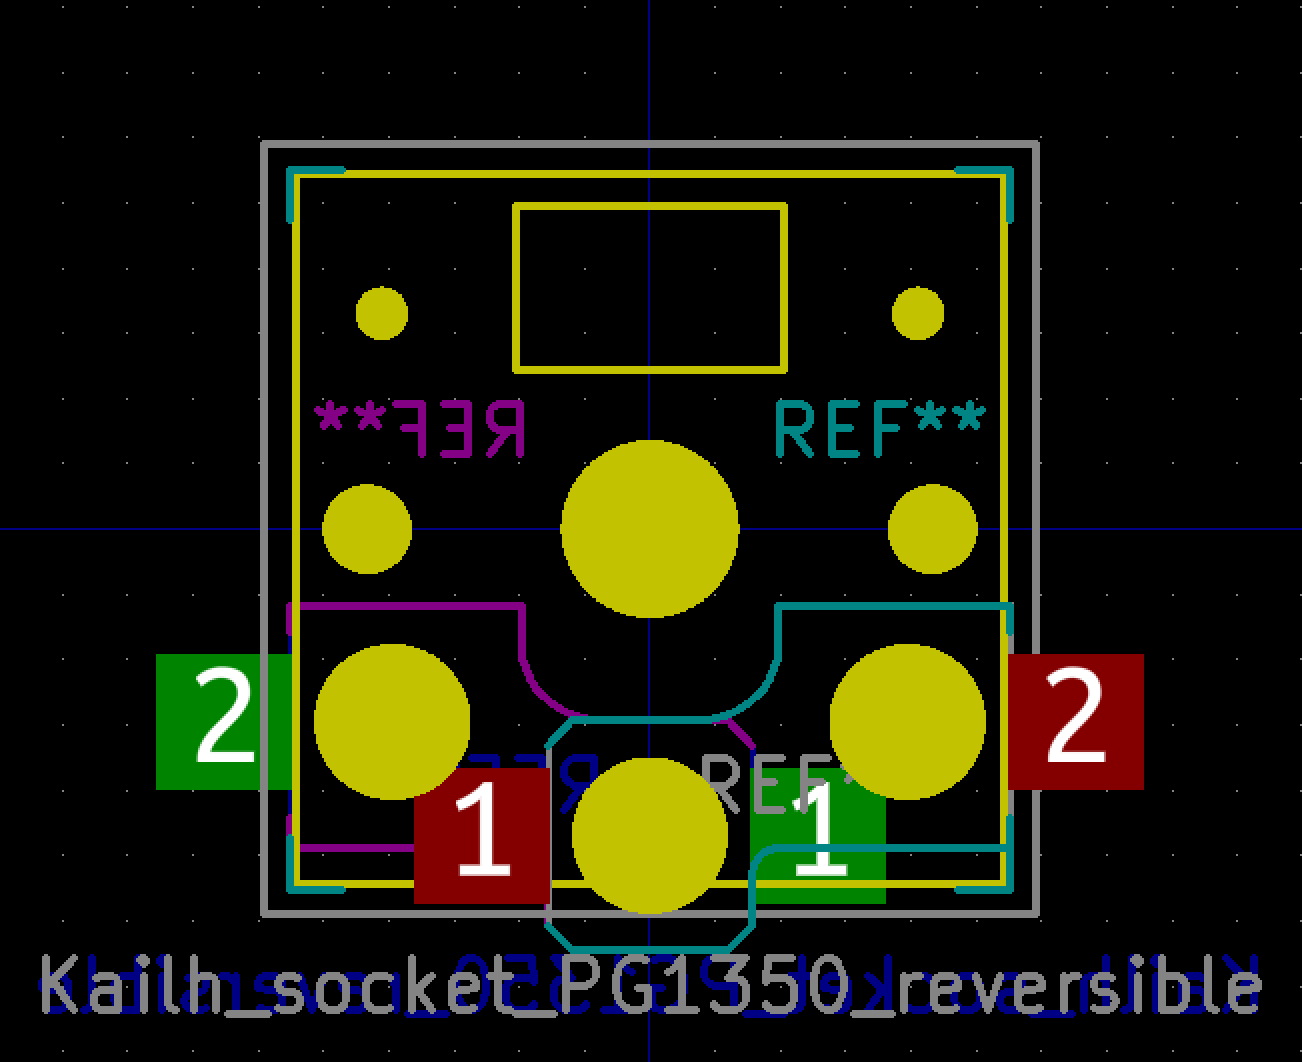 PG1350 reversible socket mount